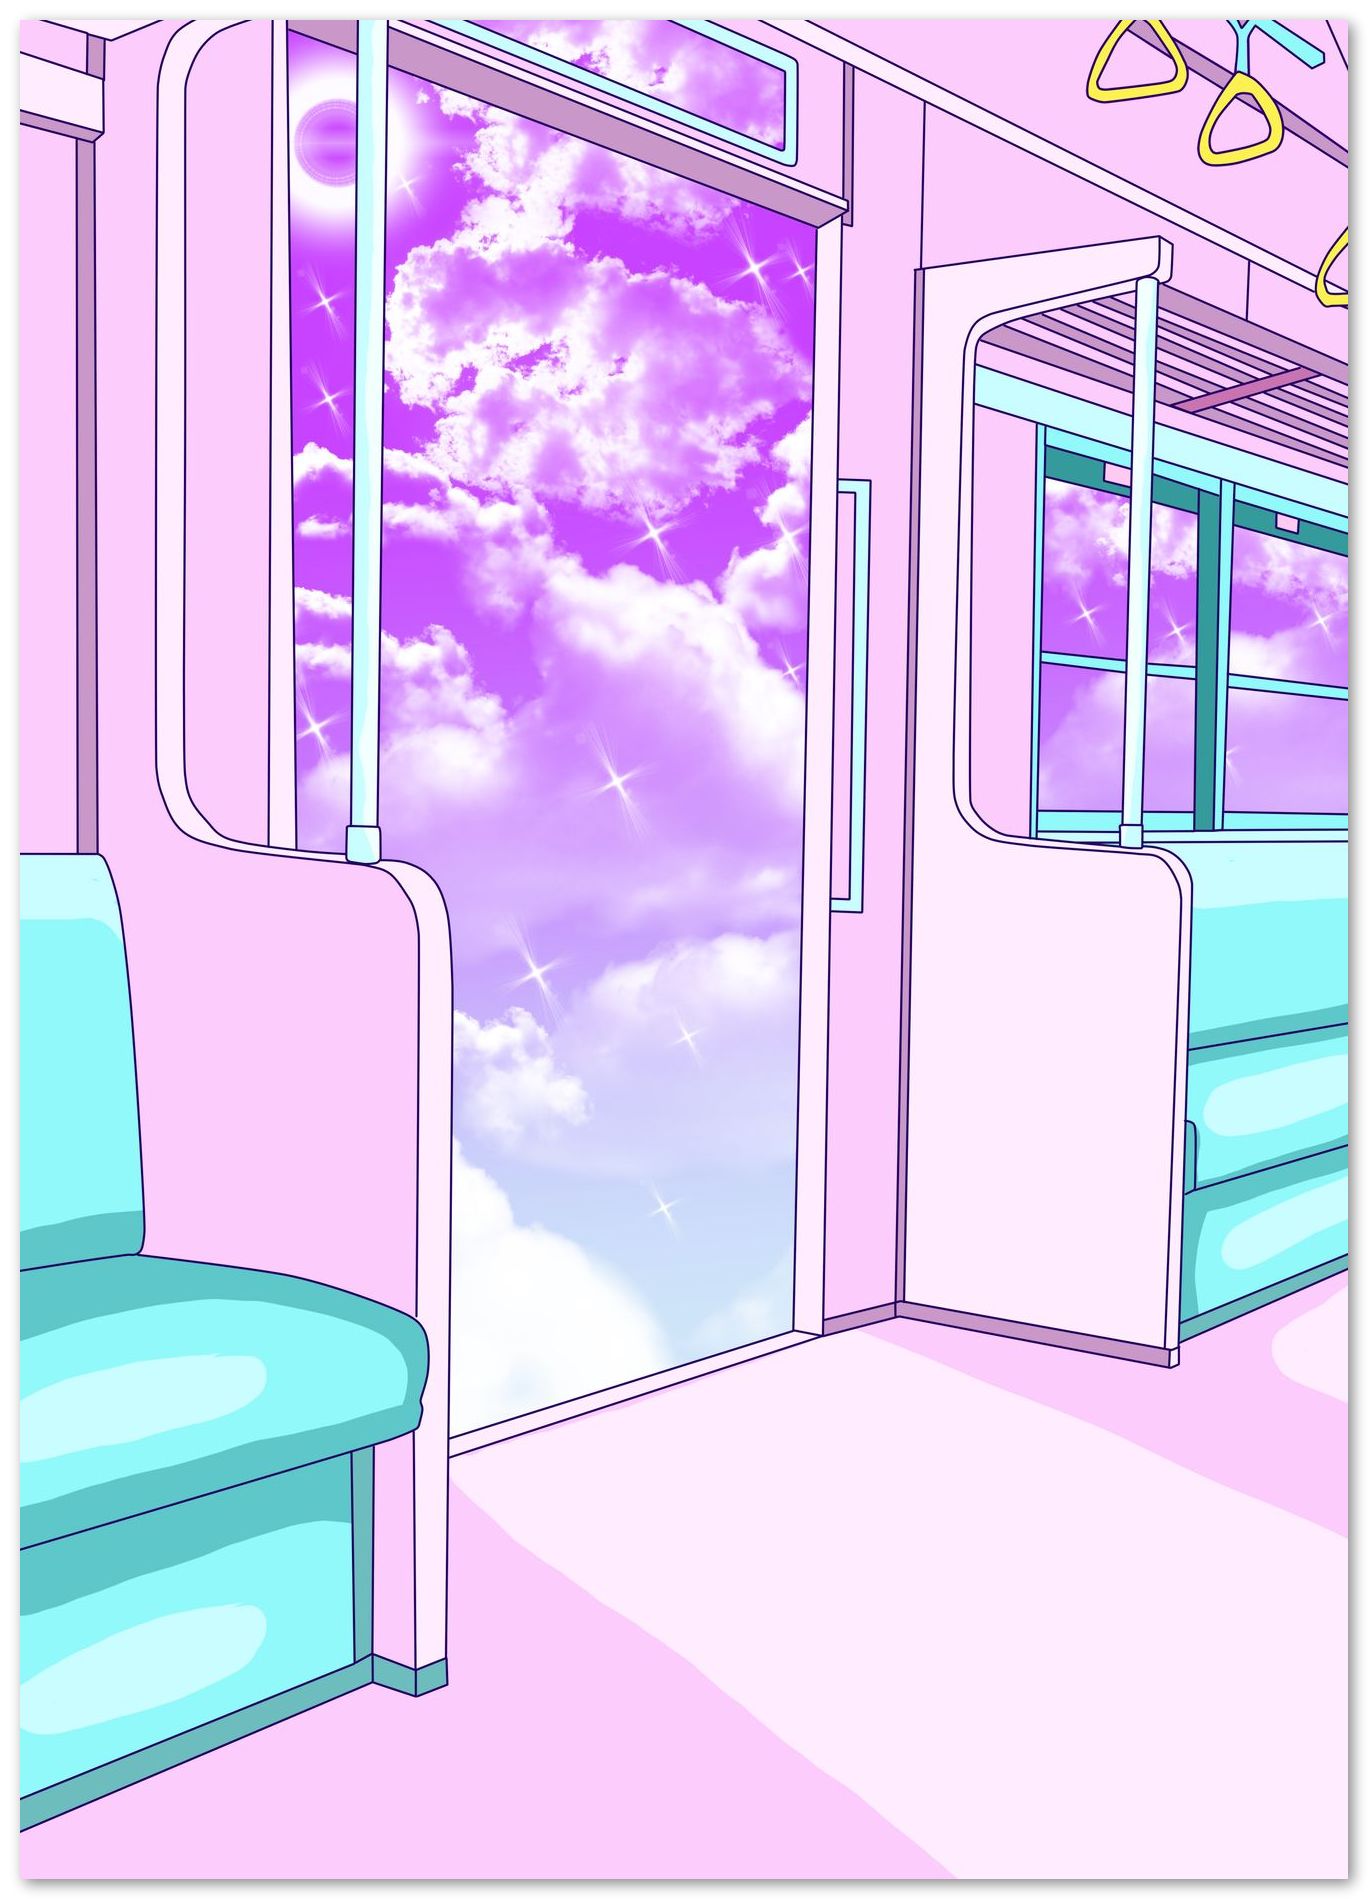 in train with beautiful sky fantasy - @beautifulday